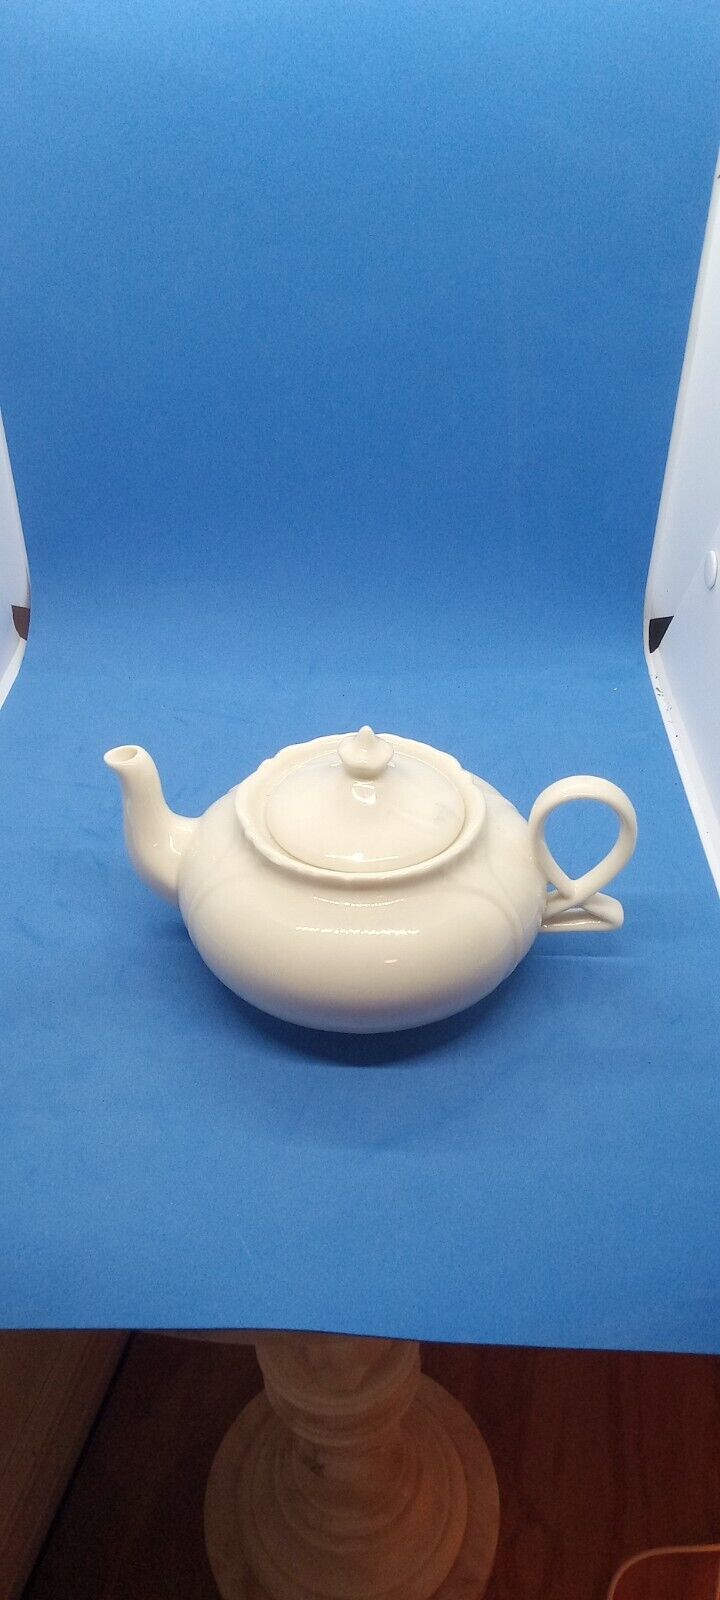 Small Adorable White Teapot Tea Pot with Fish Handle